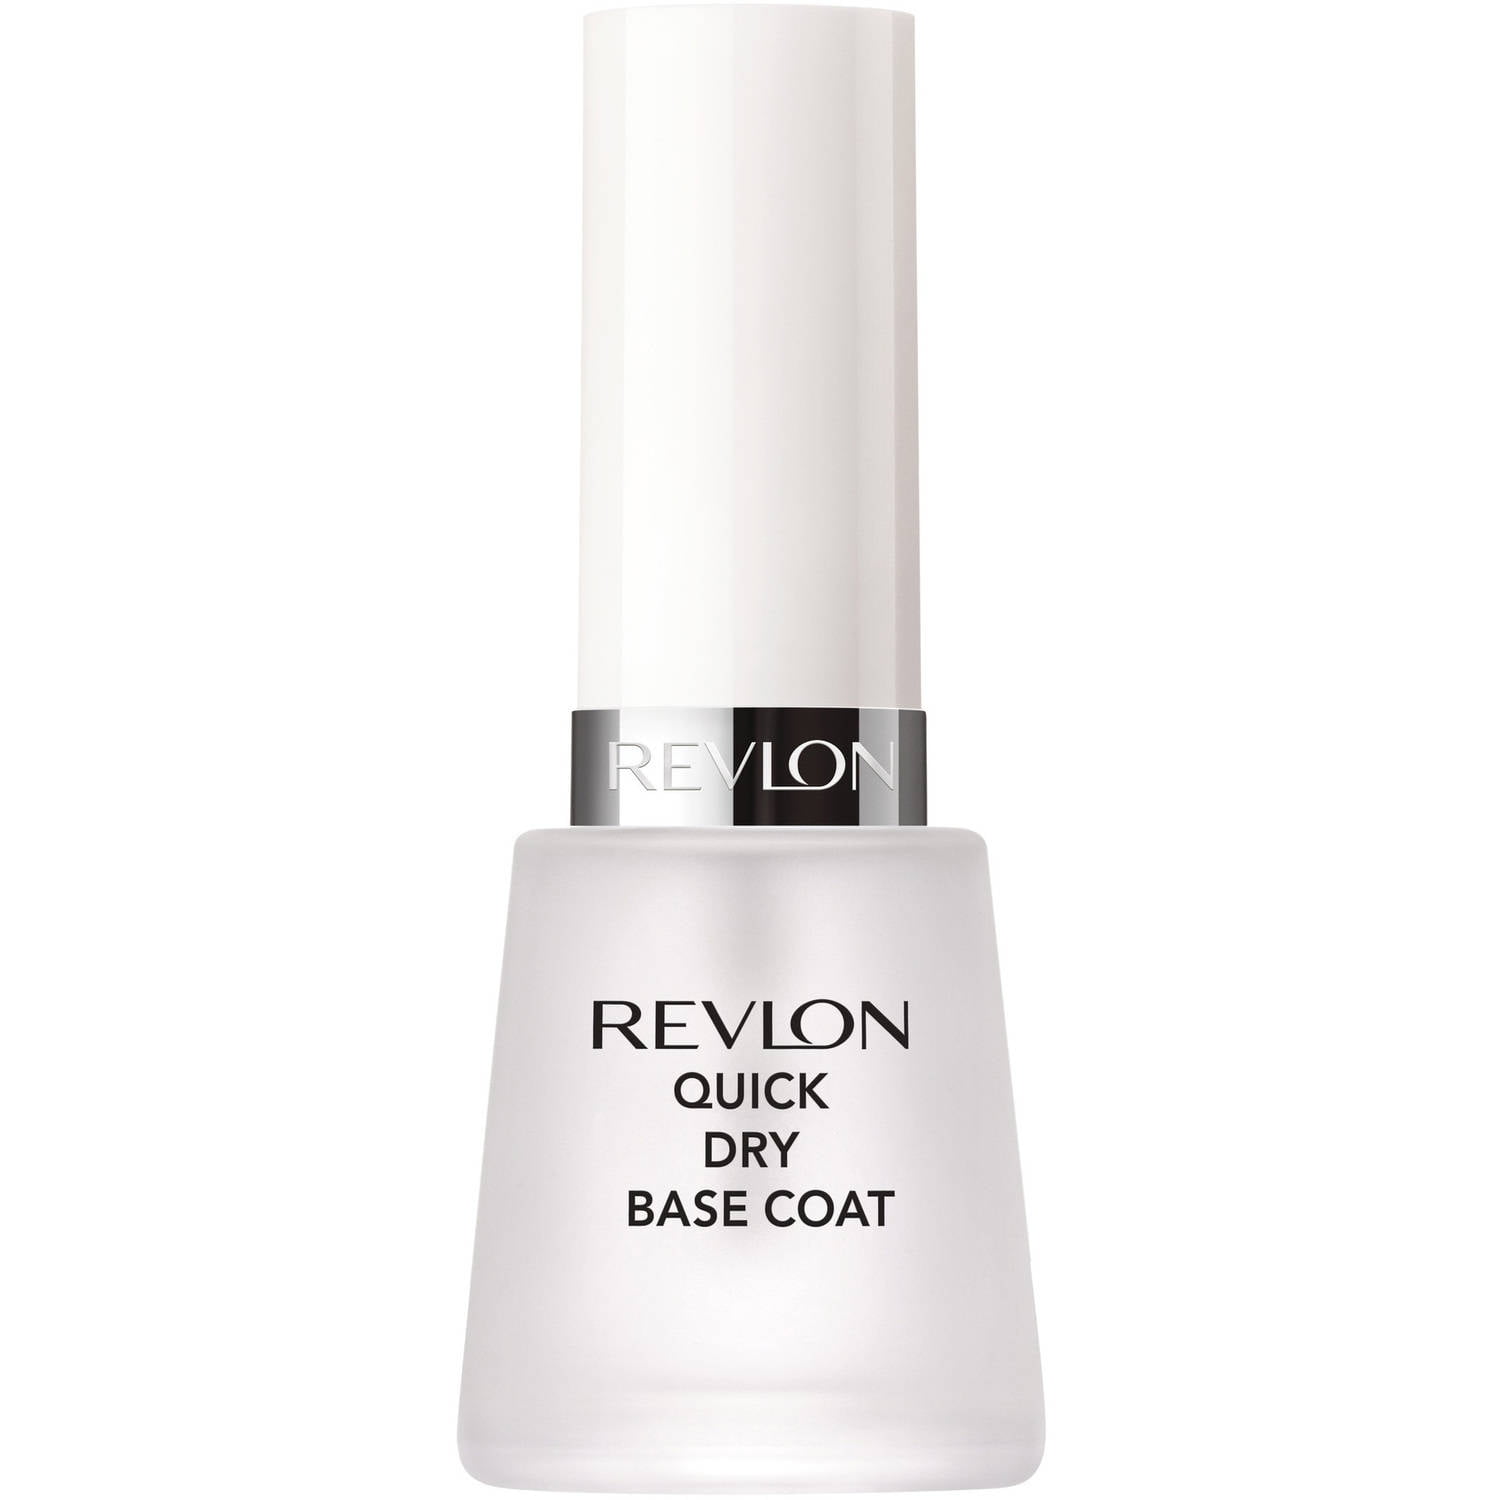 Revlon Quick Dry Base Coat for Chip Free Long Lasting Nail Polish Color,   oz 